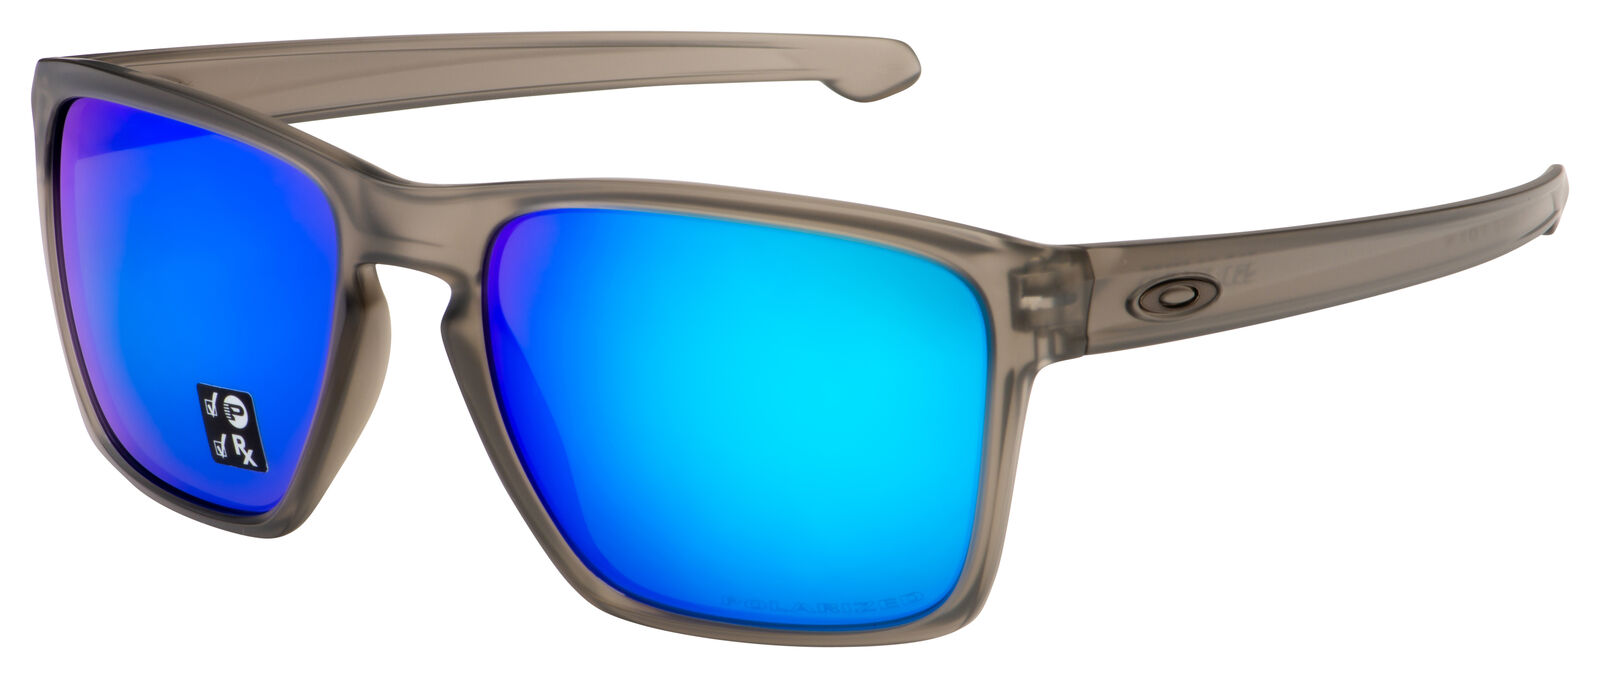 Oakley Sliver XL Sunglasses OO9341-0357 Grey Ink | Sapphire Iridium Polarized